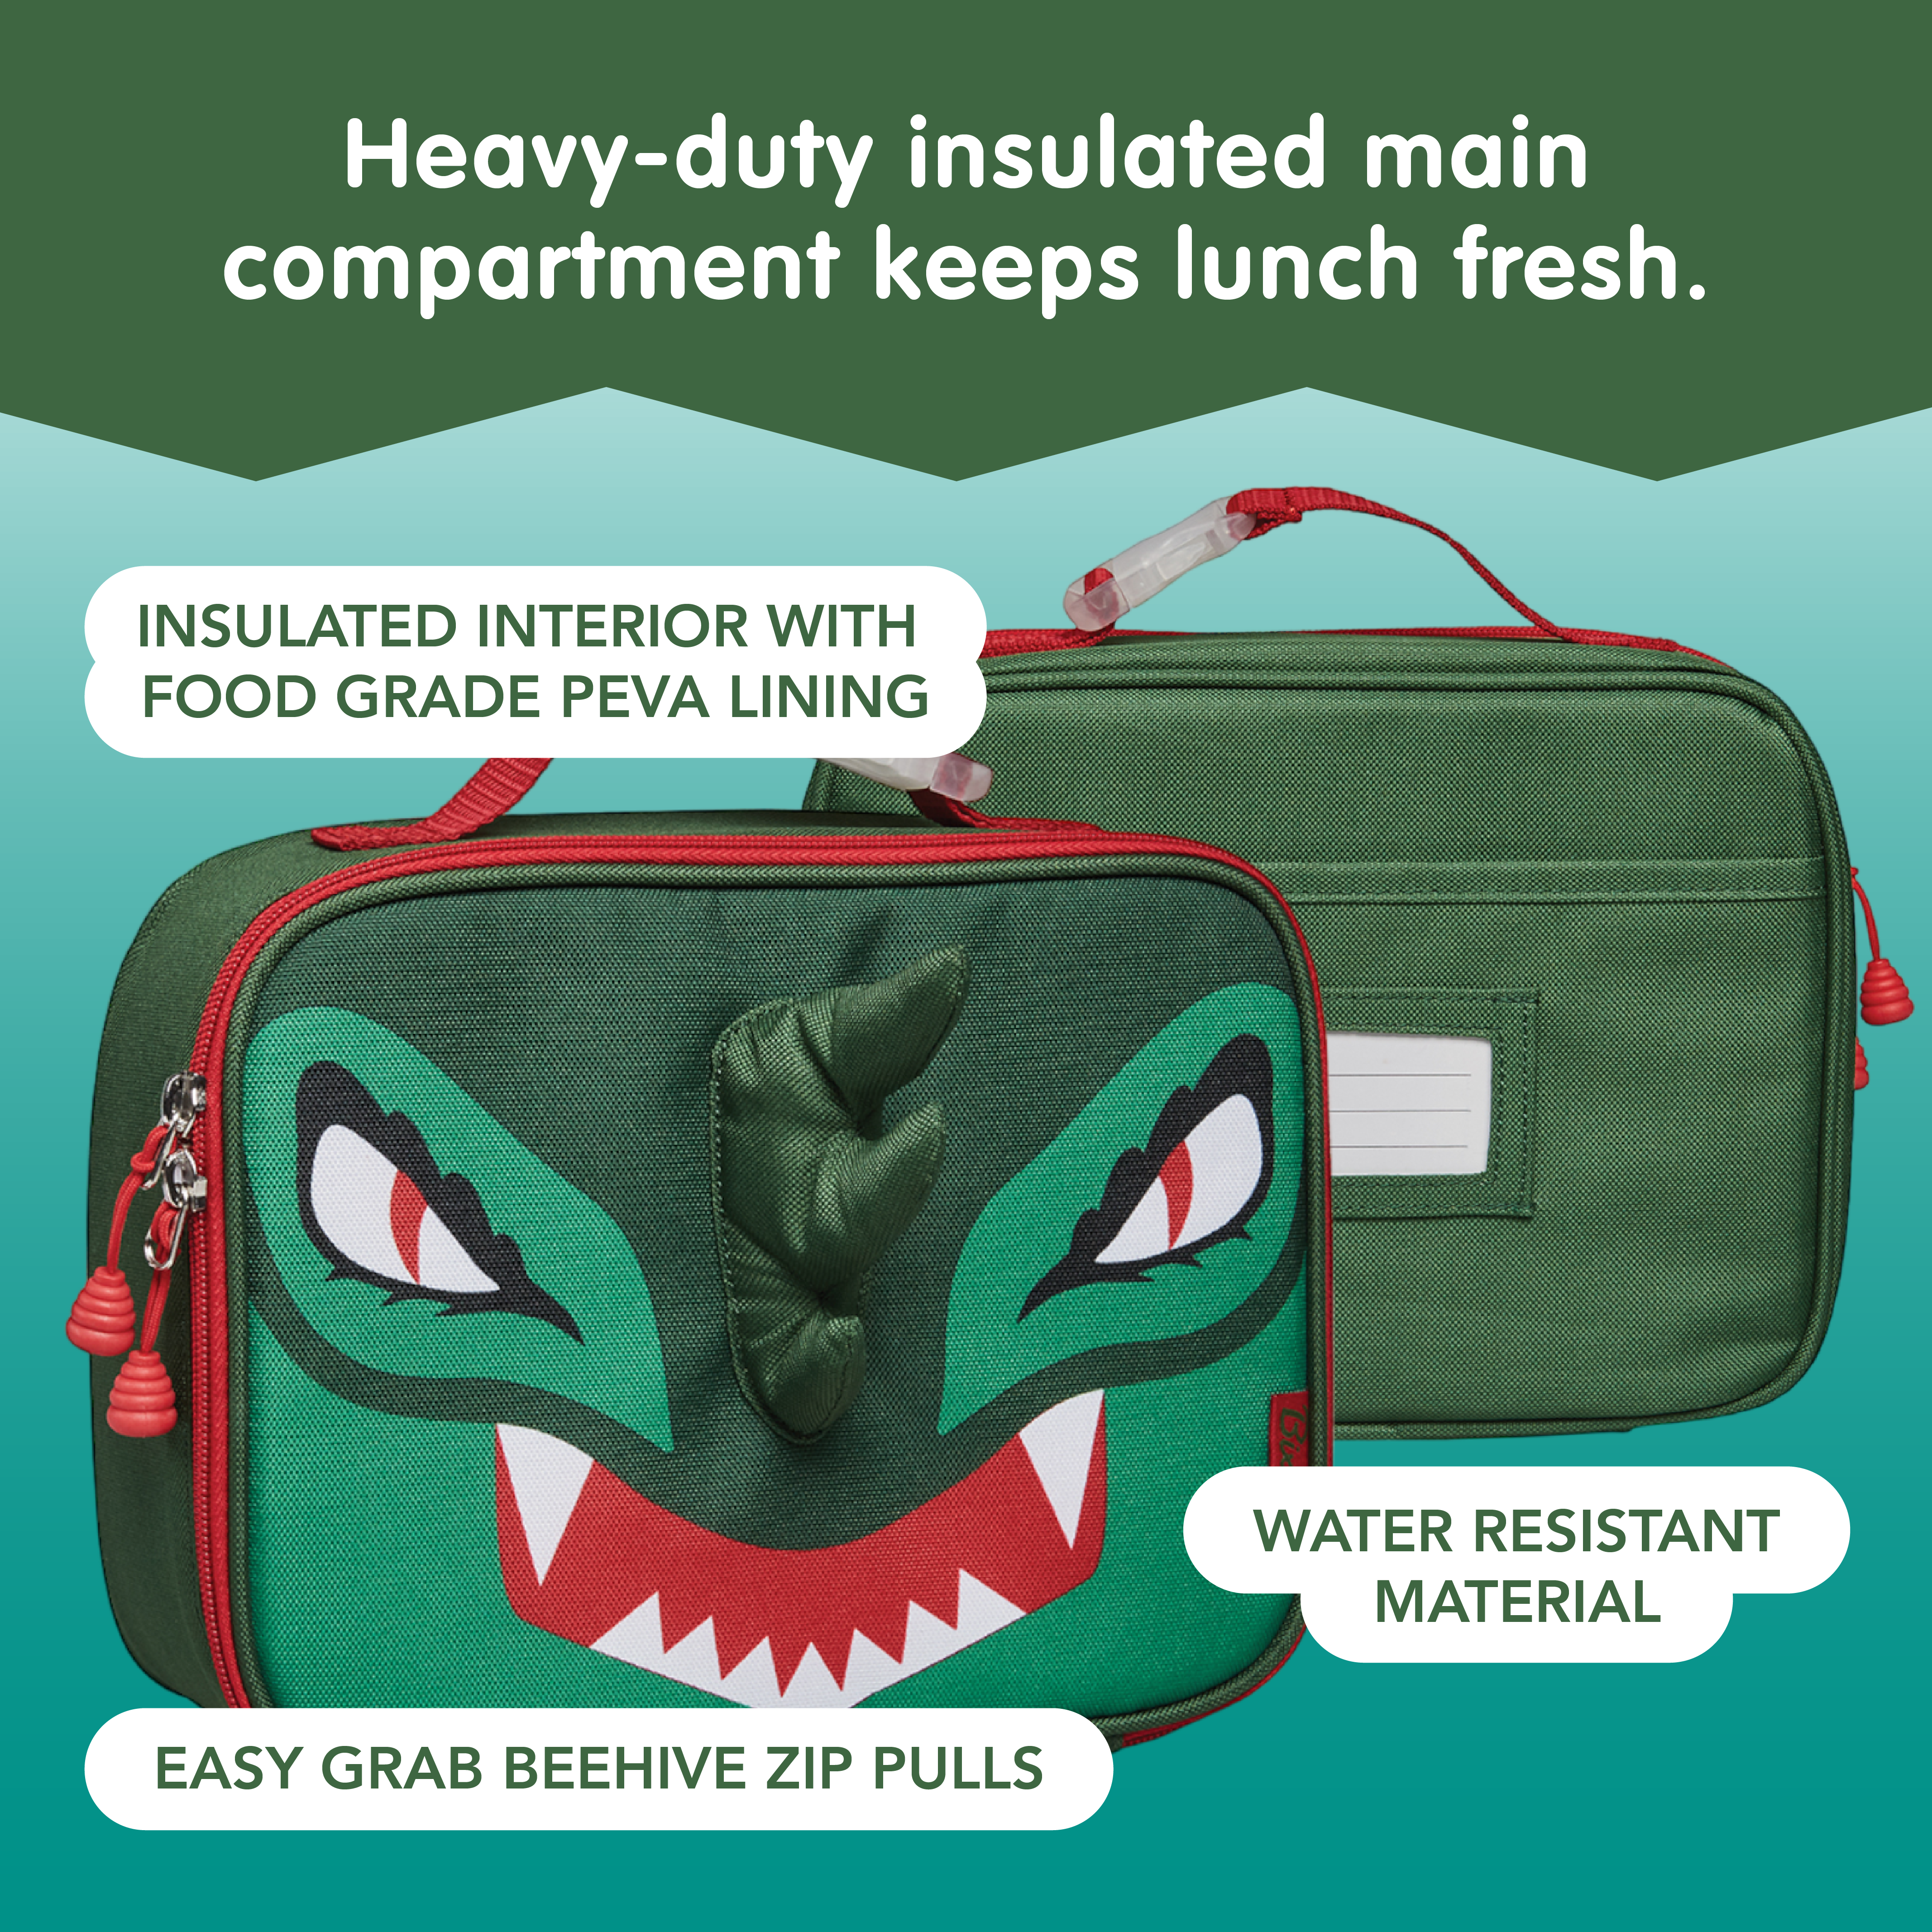 Dinosaur Lunch Box Kids Dino Insulated Bag Soft Mini Cooler